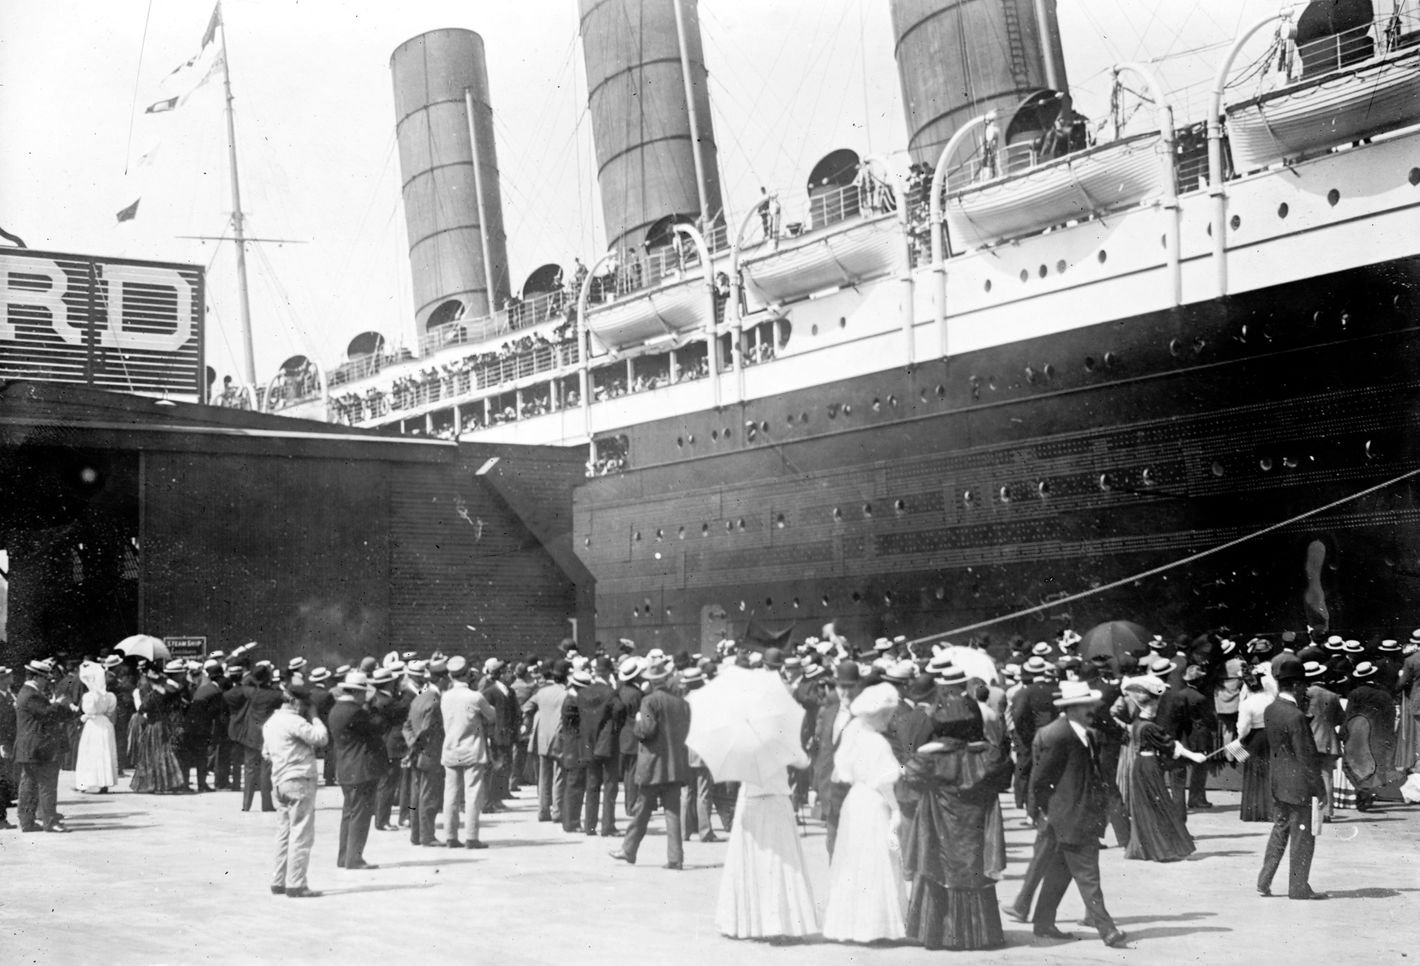 Титаник затонул в 1912